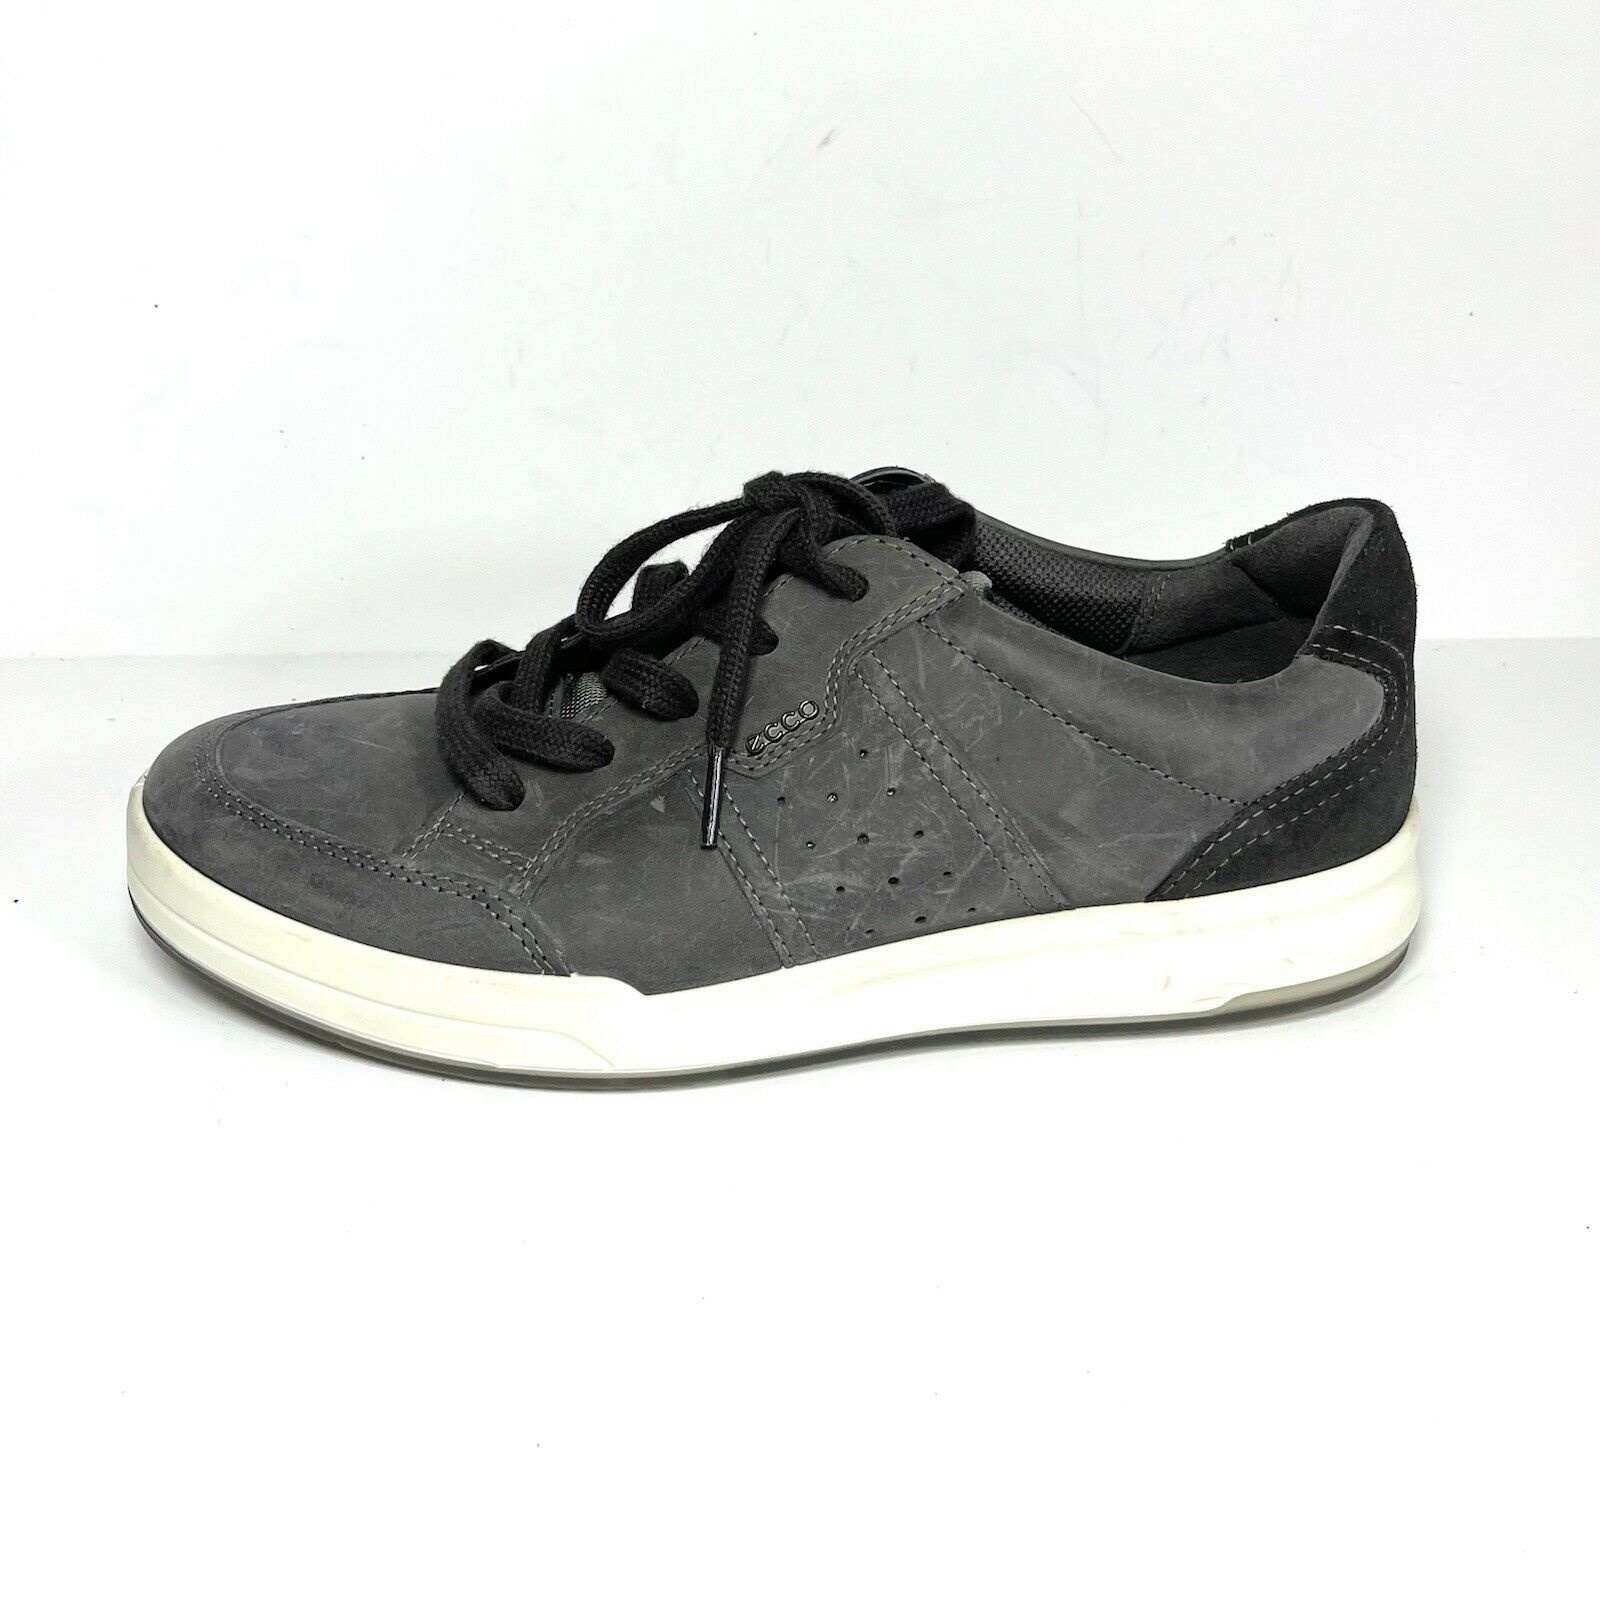 ECCO Men's Sneakers Shoes Gray Suede Leather Size EU 40 US 6-6.5 EUC